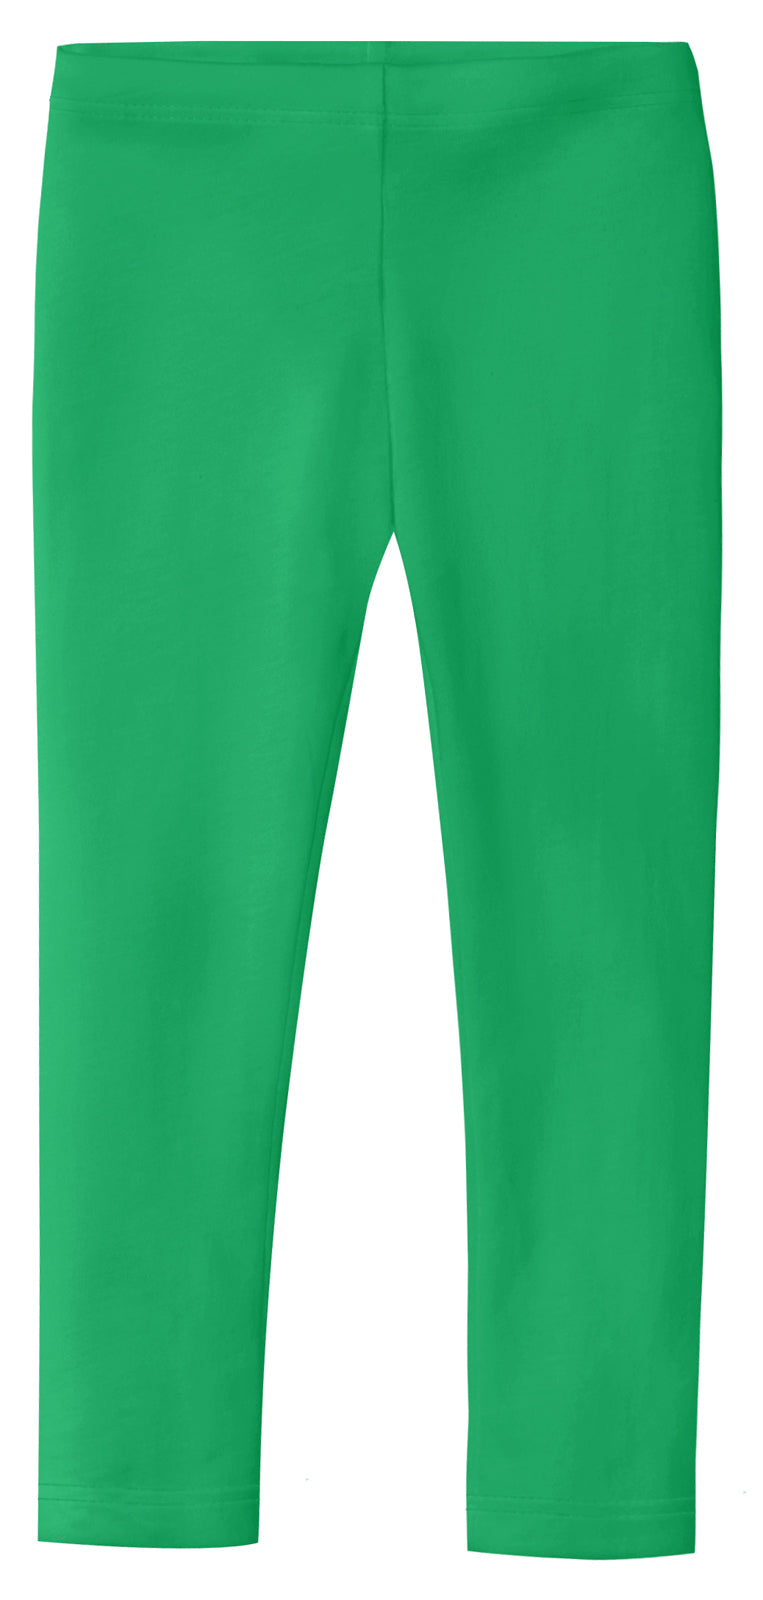 365 Kids Garanimals Girls Bow Leggings 6 Green Tie Dye Pants Elastic Waist  NEW